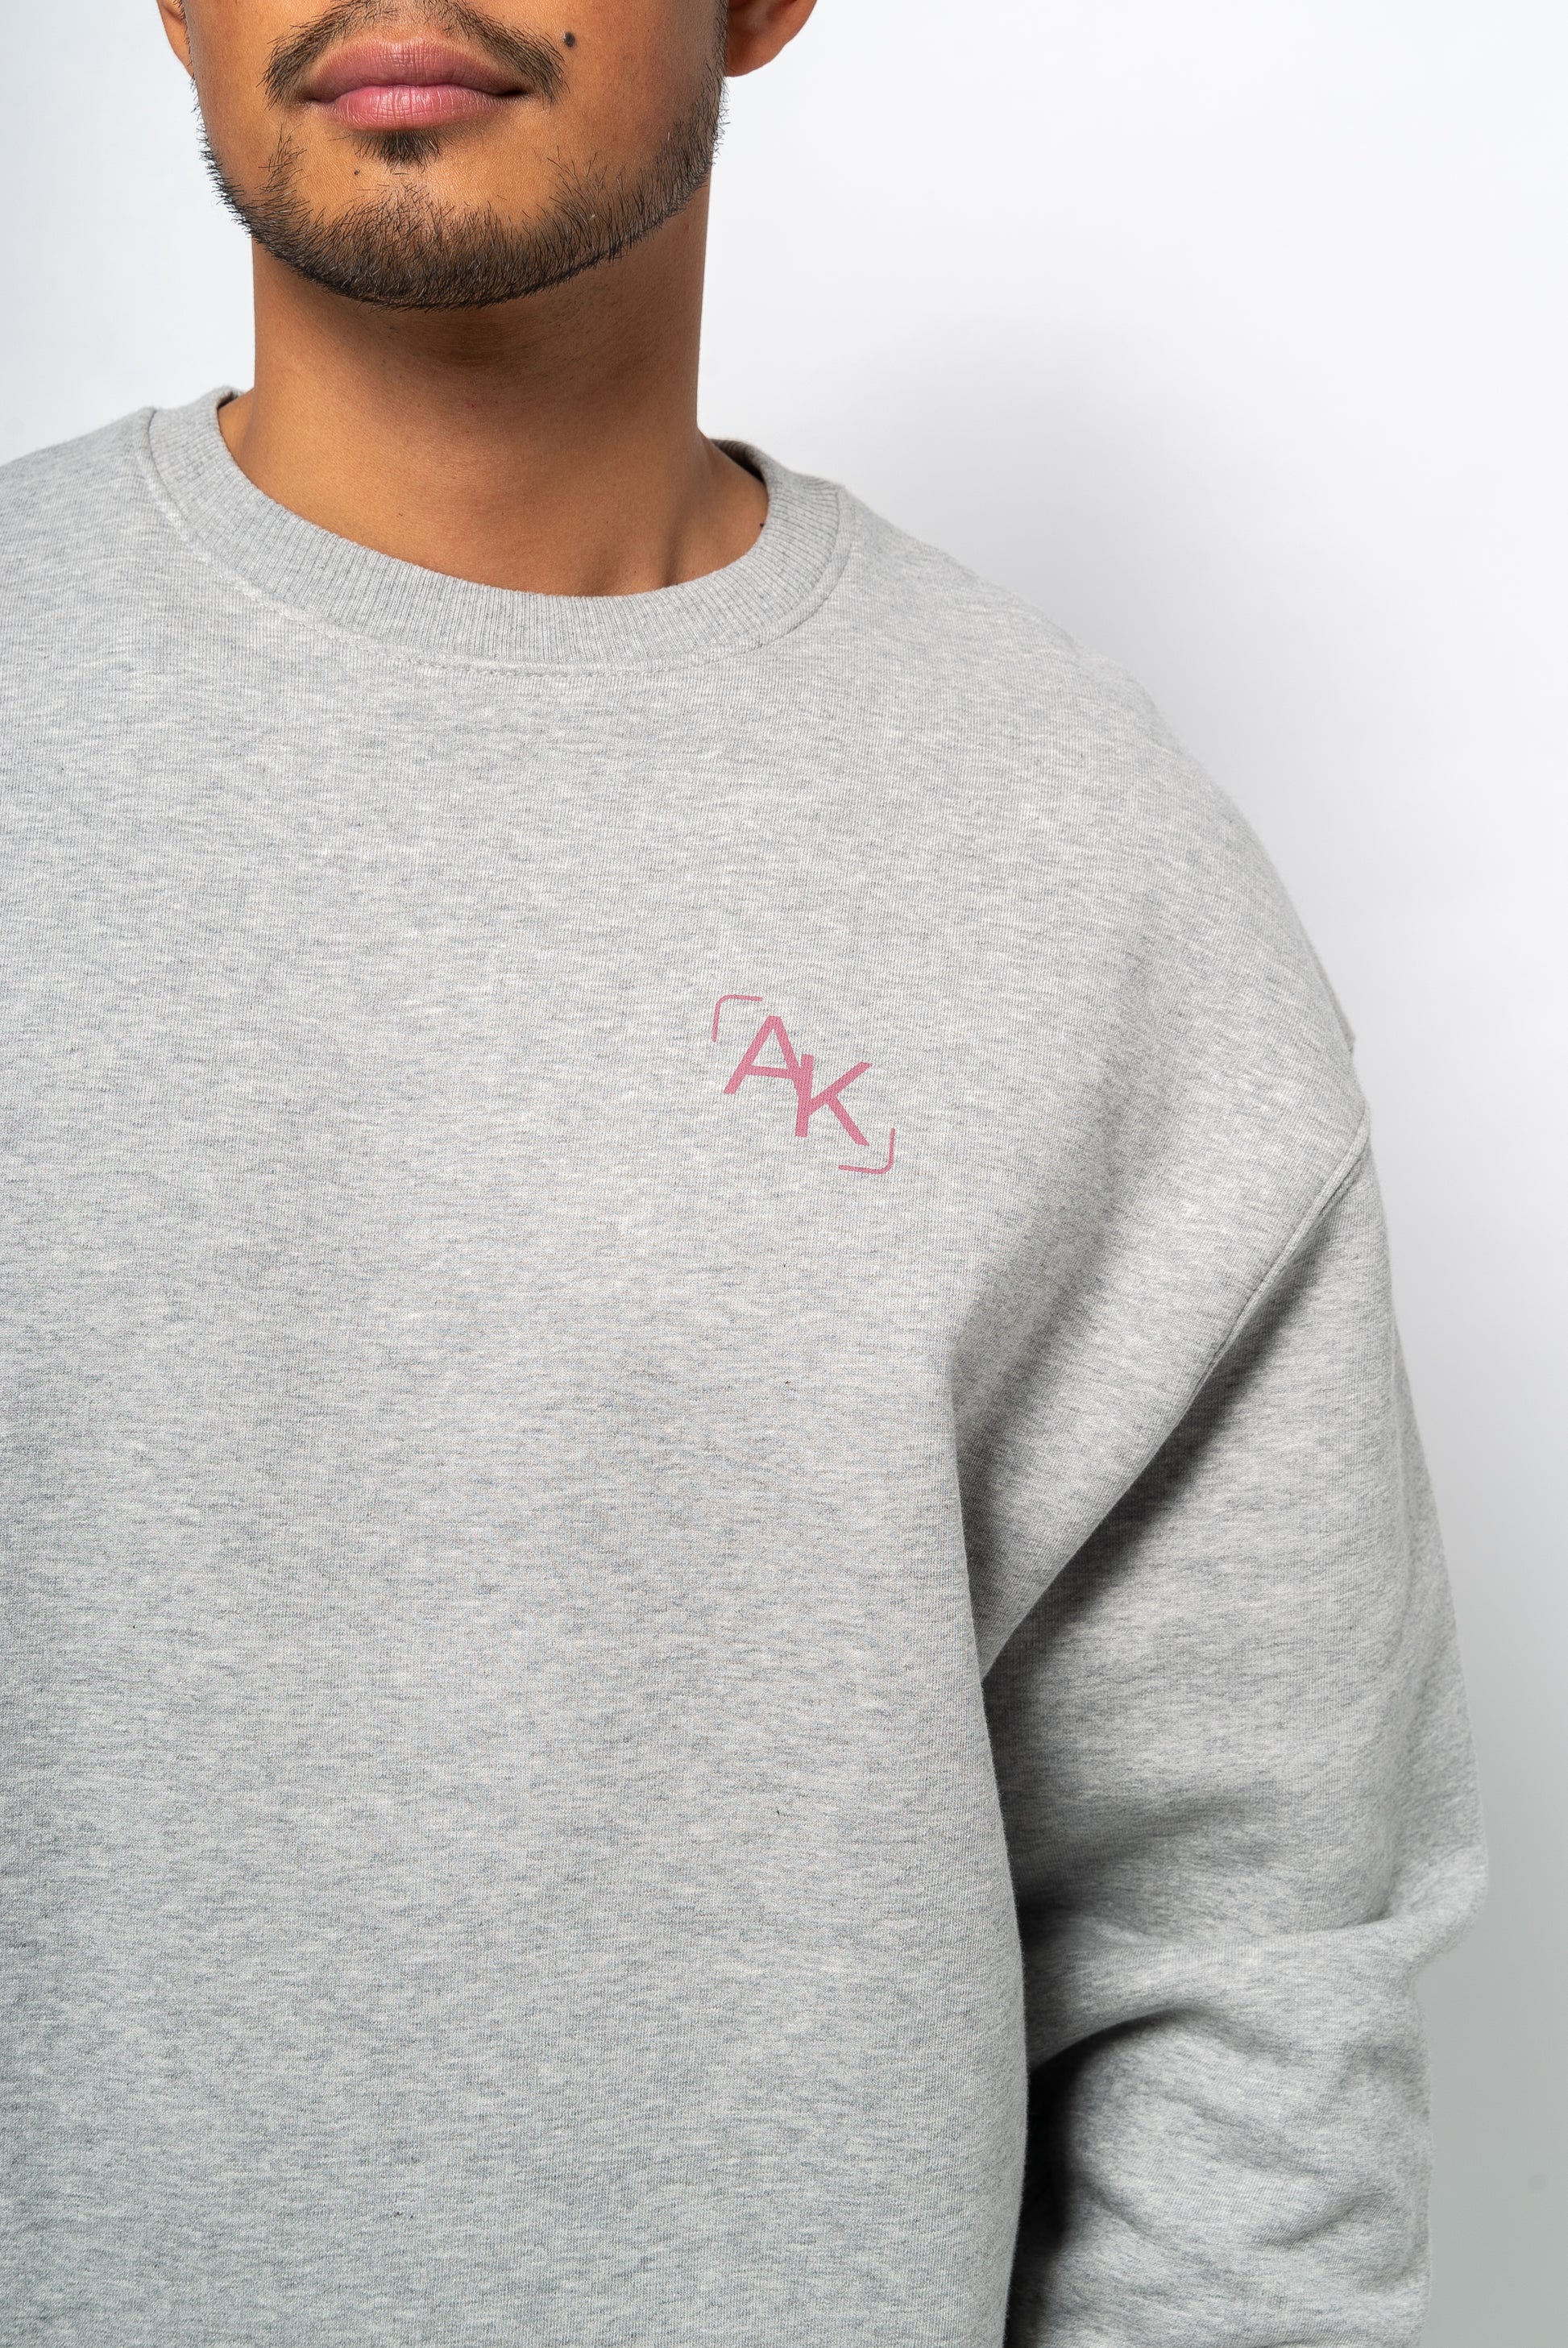 light grey sweatshirt and dusty pink logo